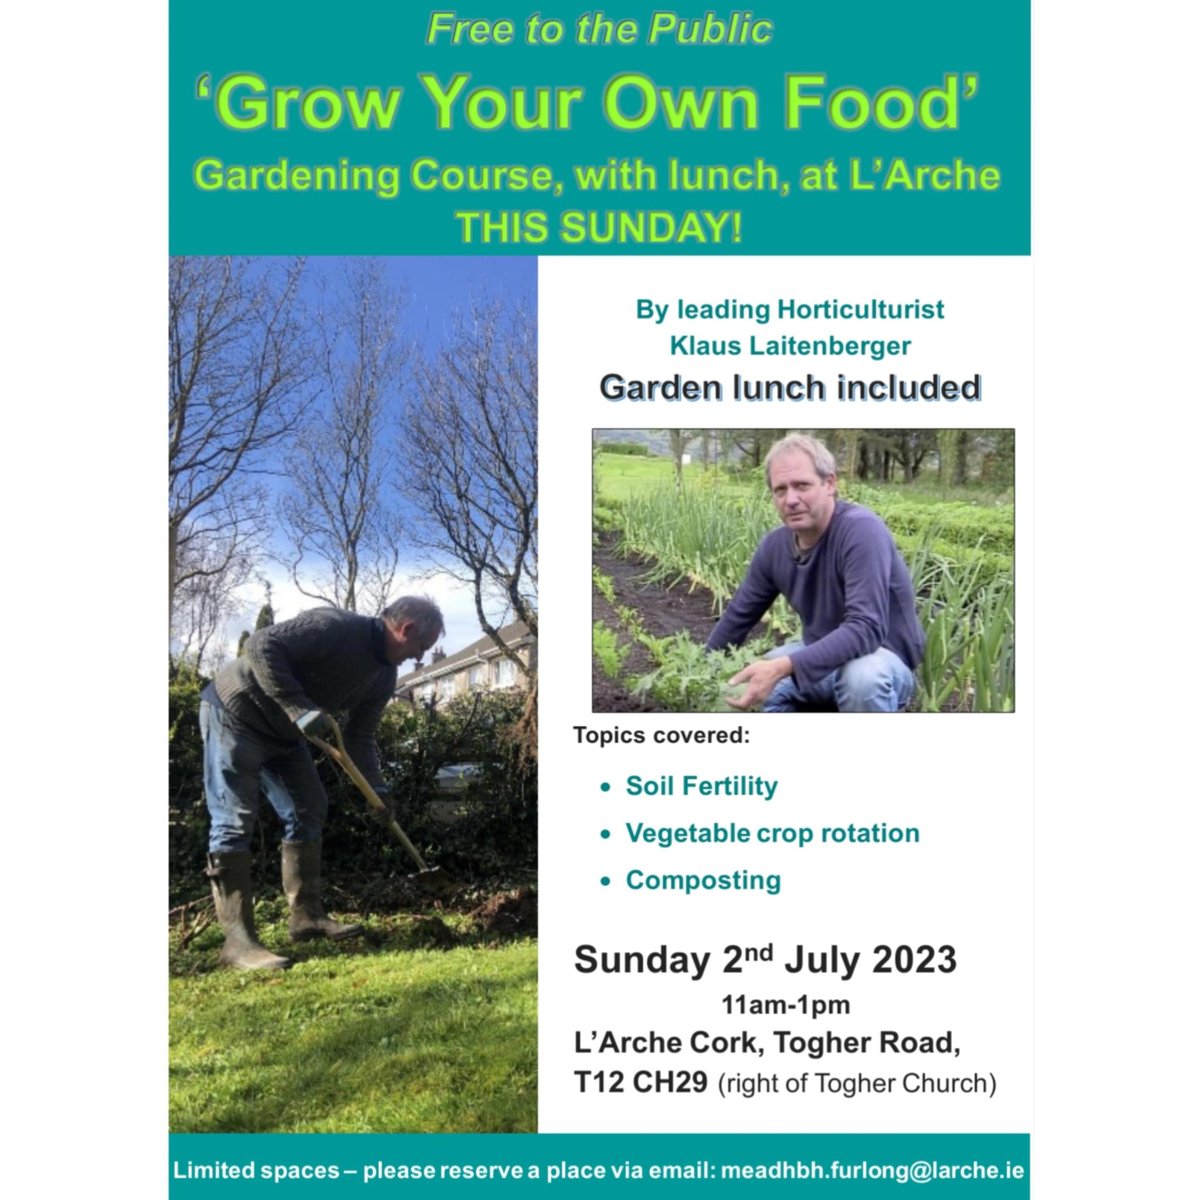 Organic gardening course in Cork this Sunday